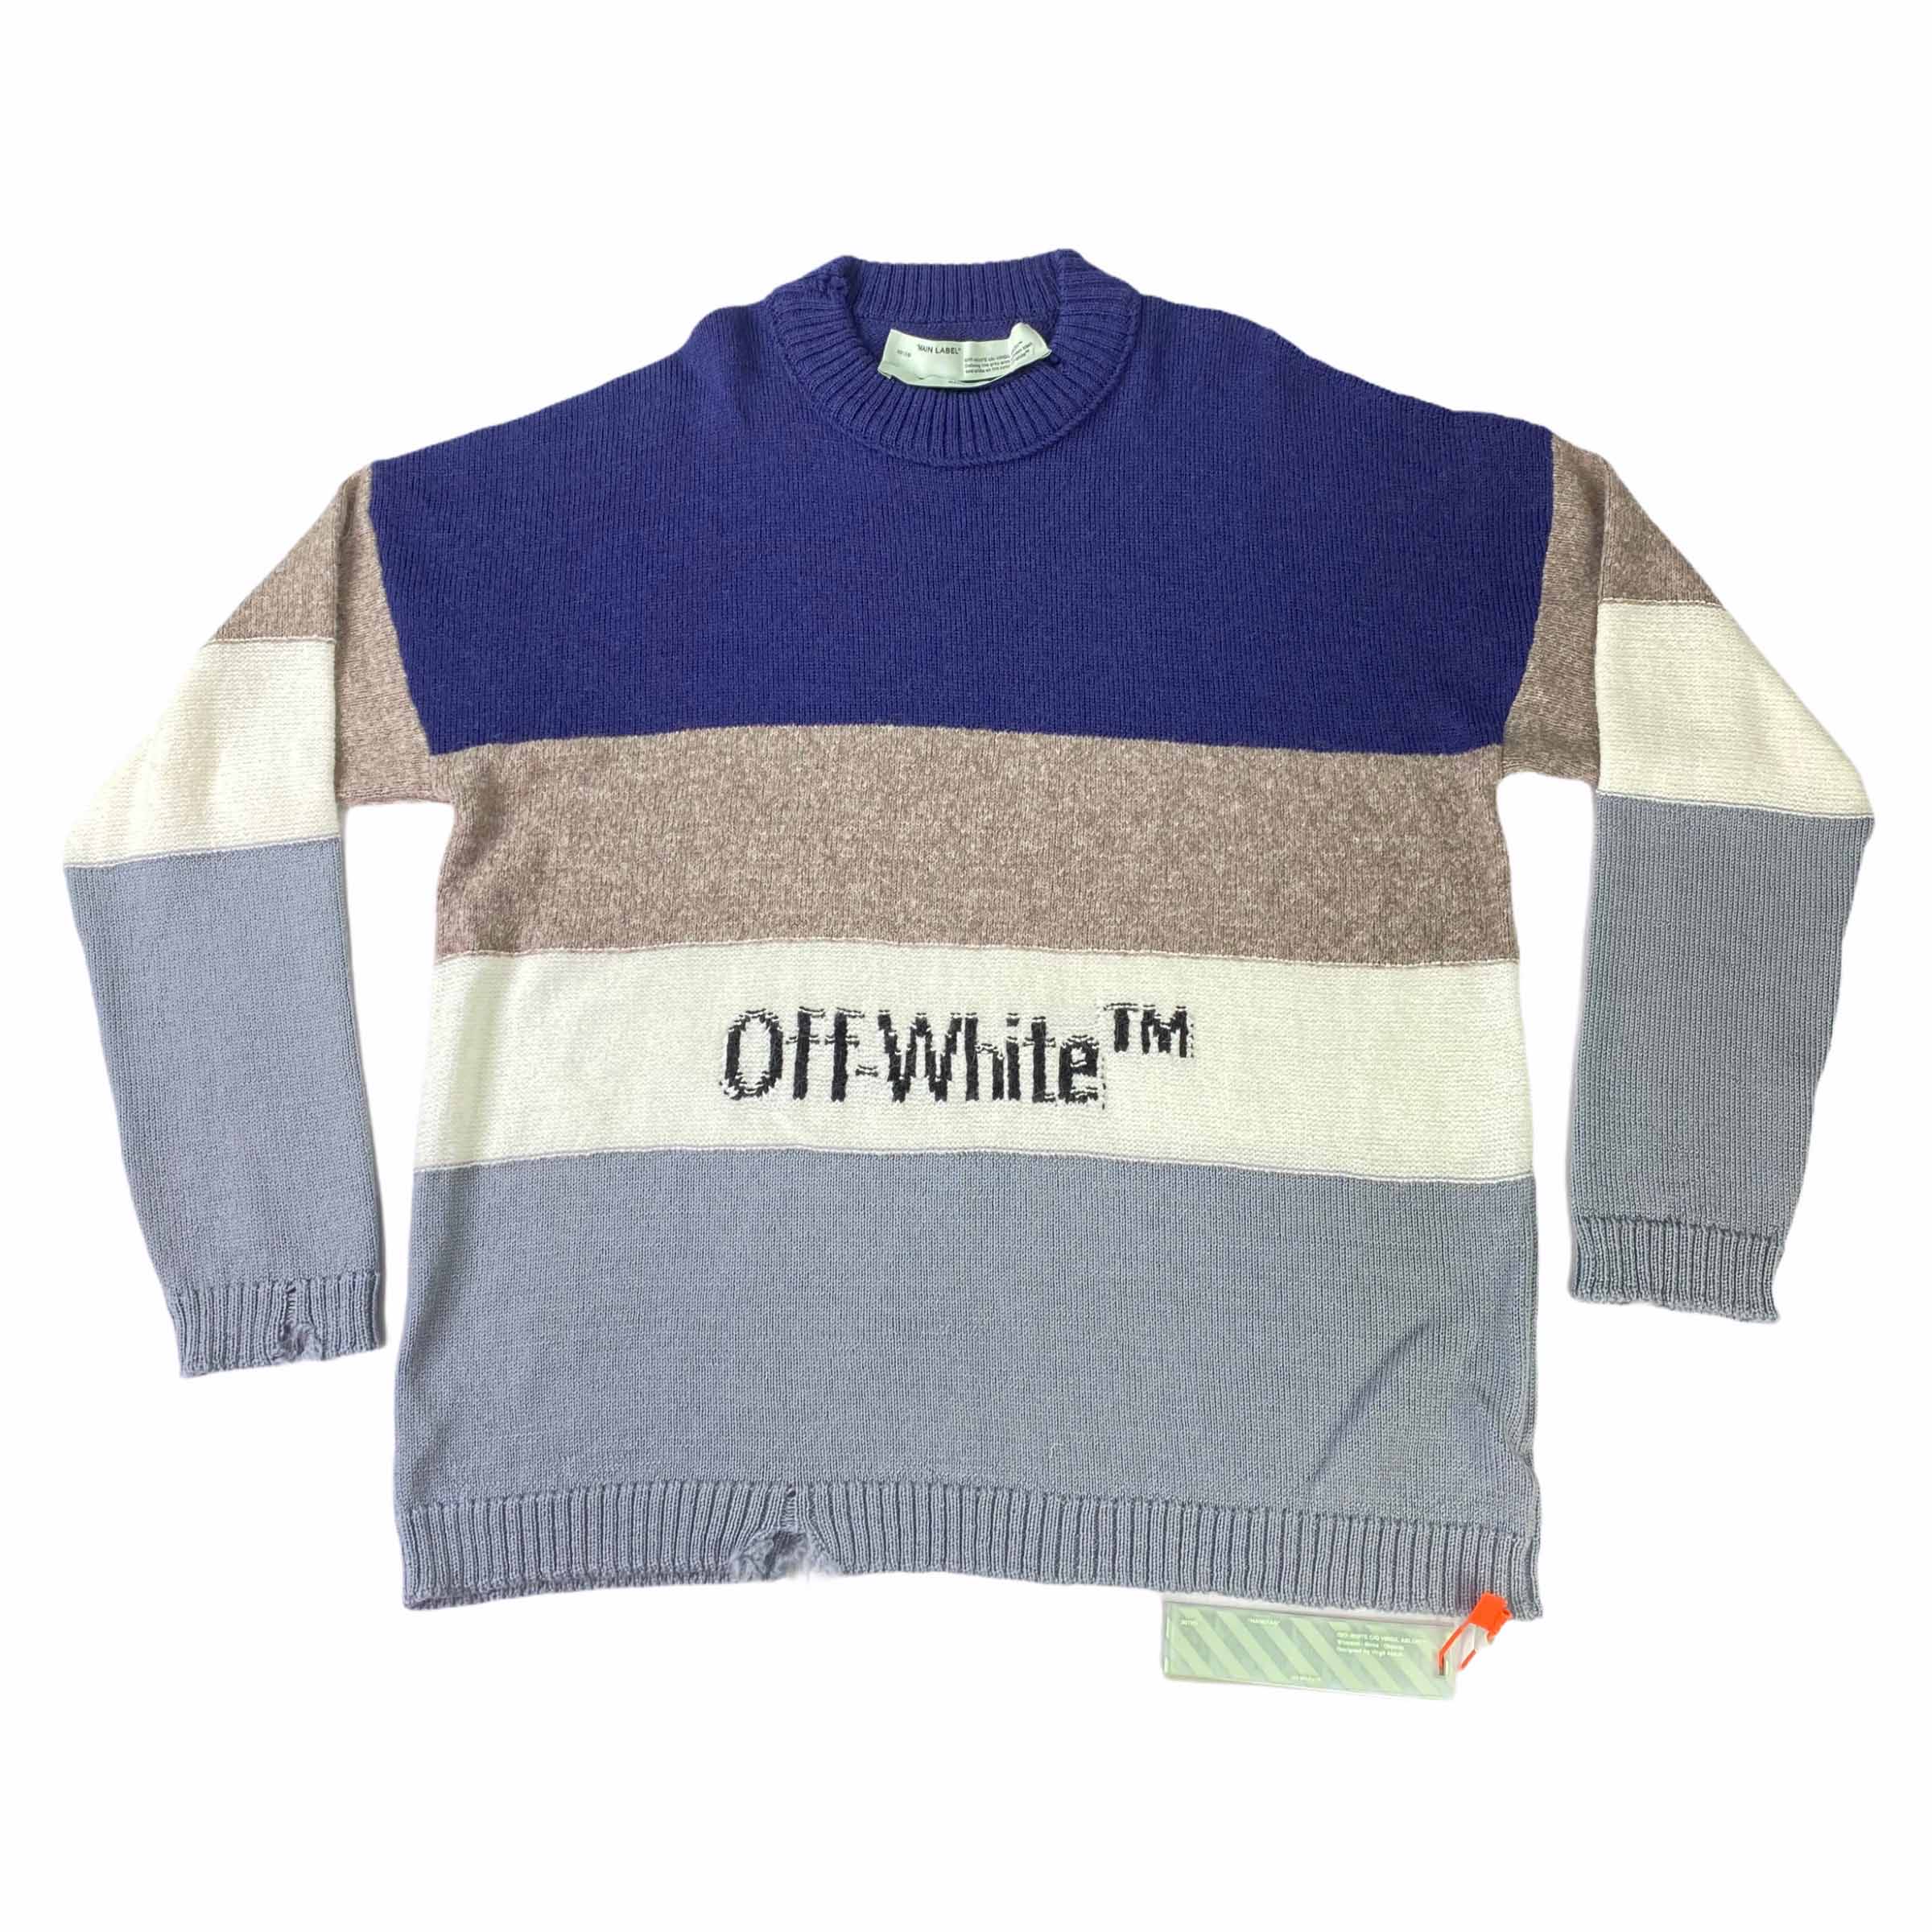 [Off White] Blue Multi Crew Neck Sweater - Size XXL